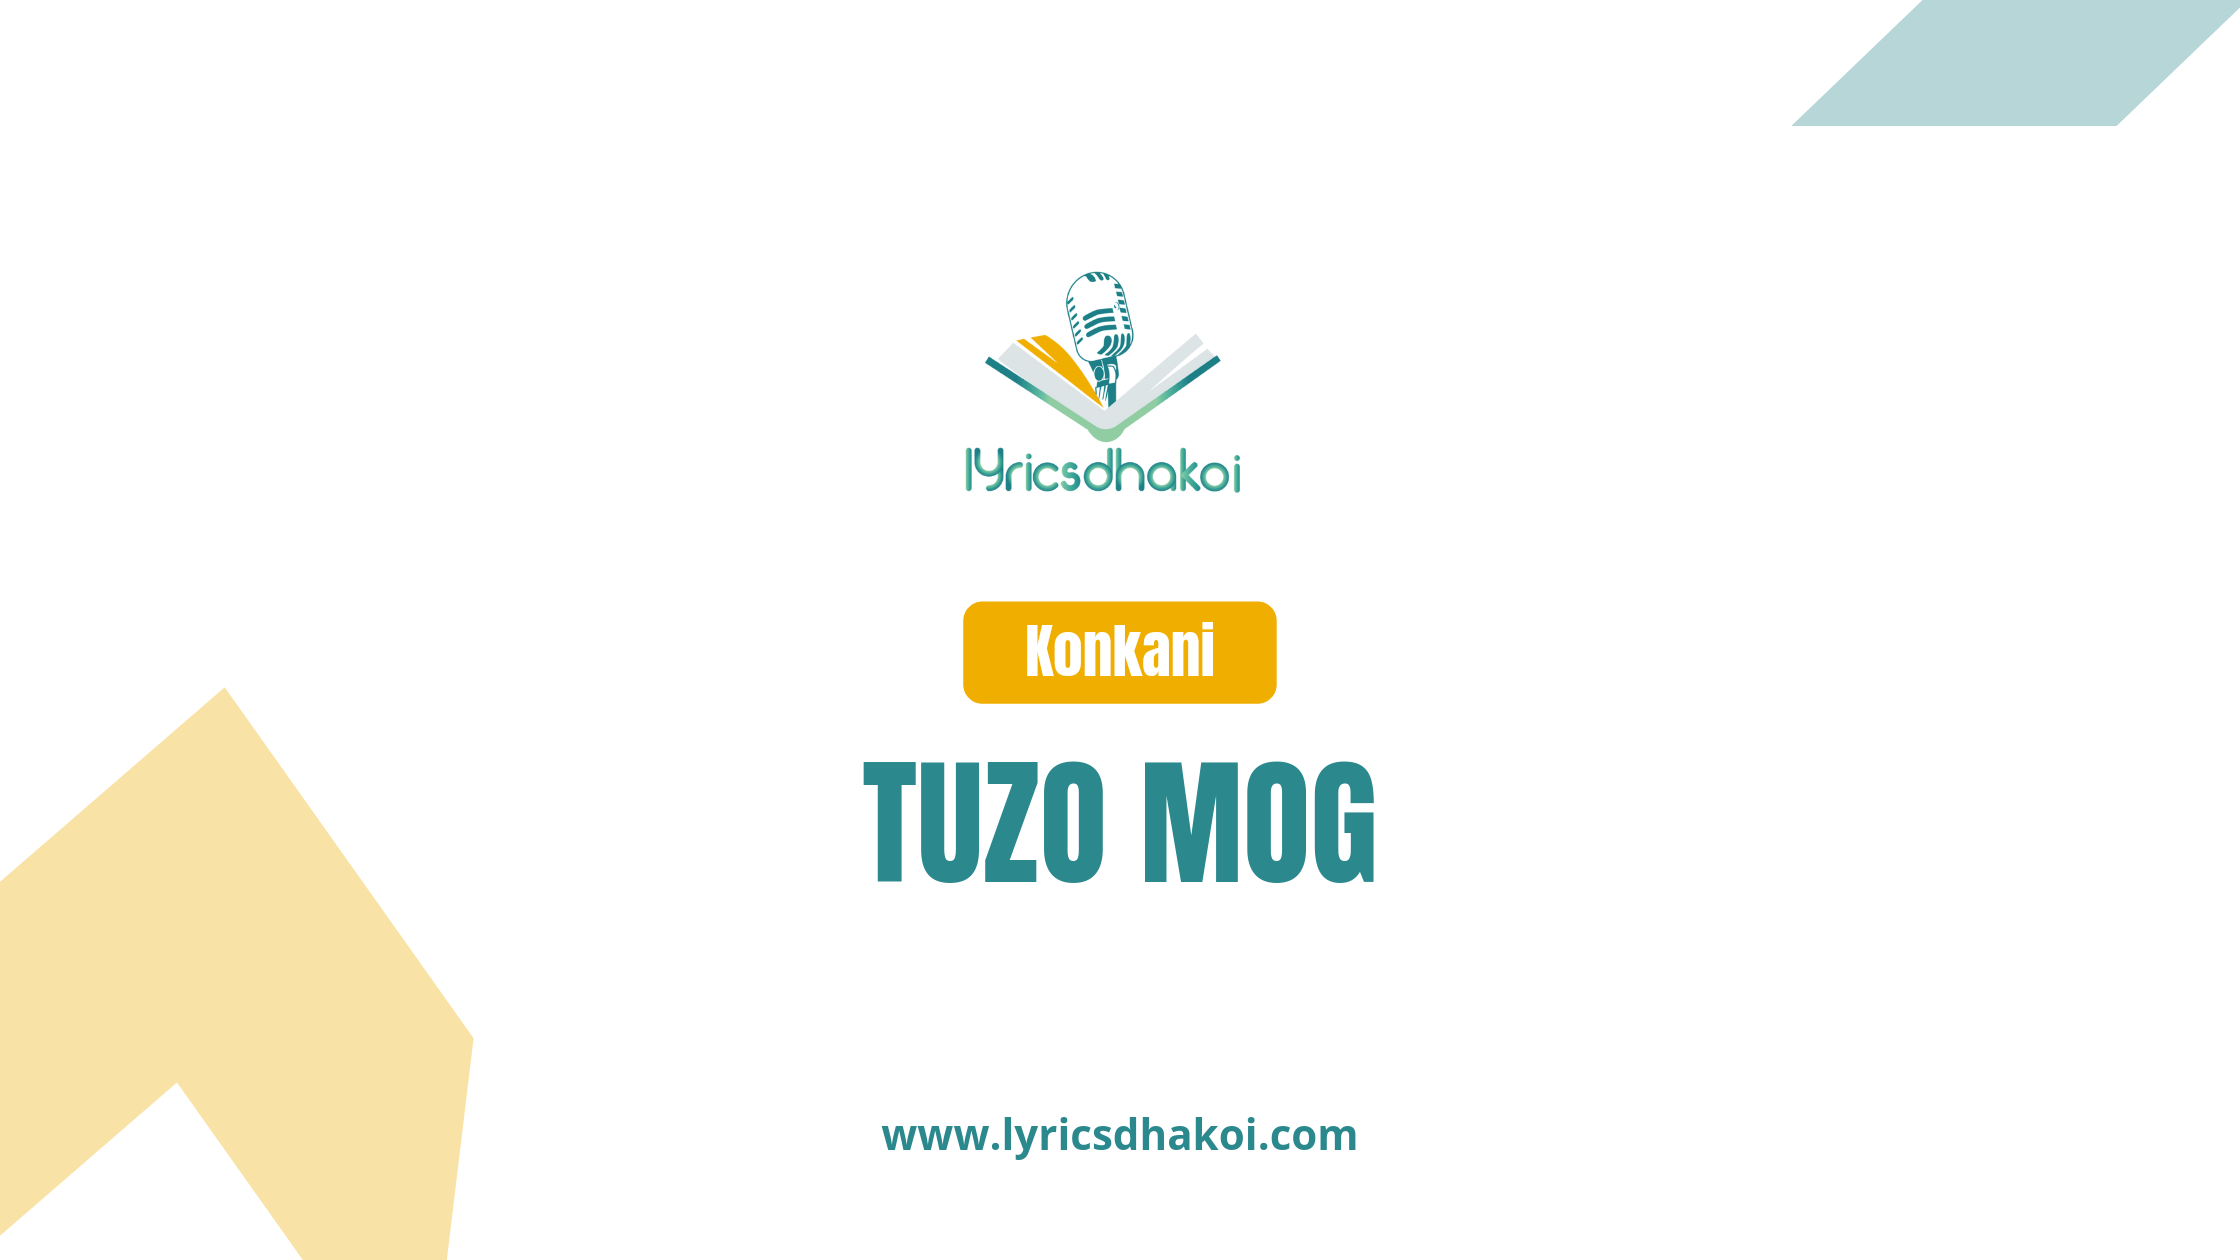 Tuzo Mog Konkani Lyrics for Karaoke Online - LyricsDhakoi.com